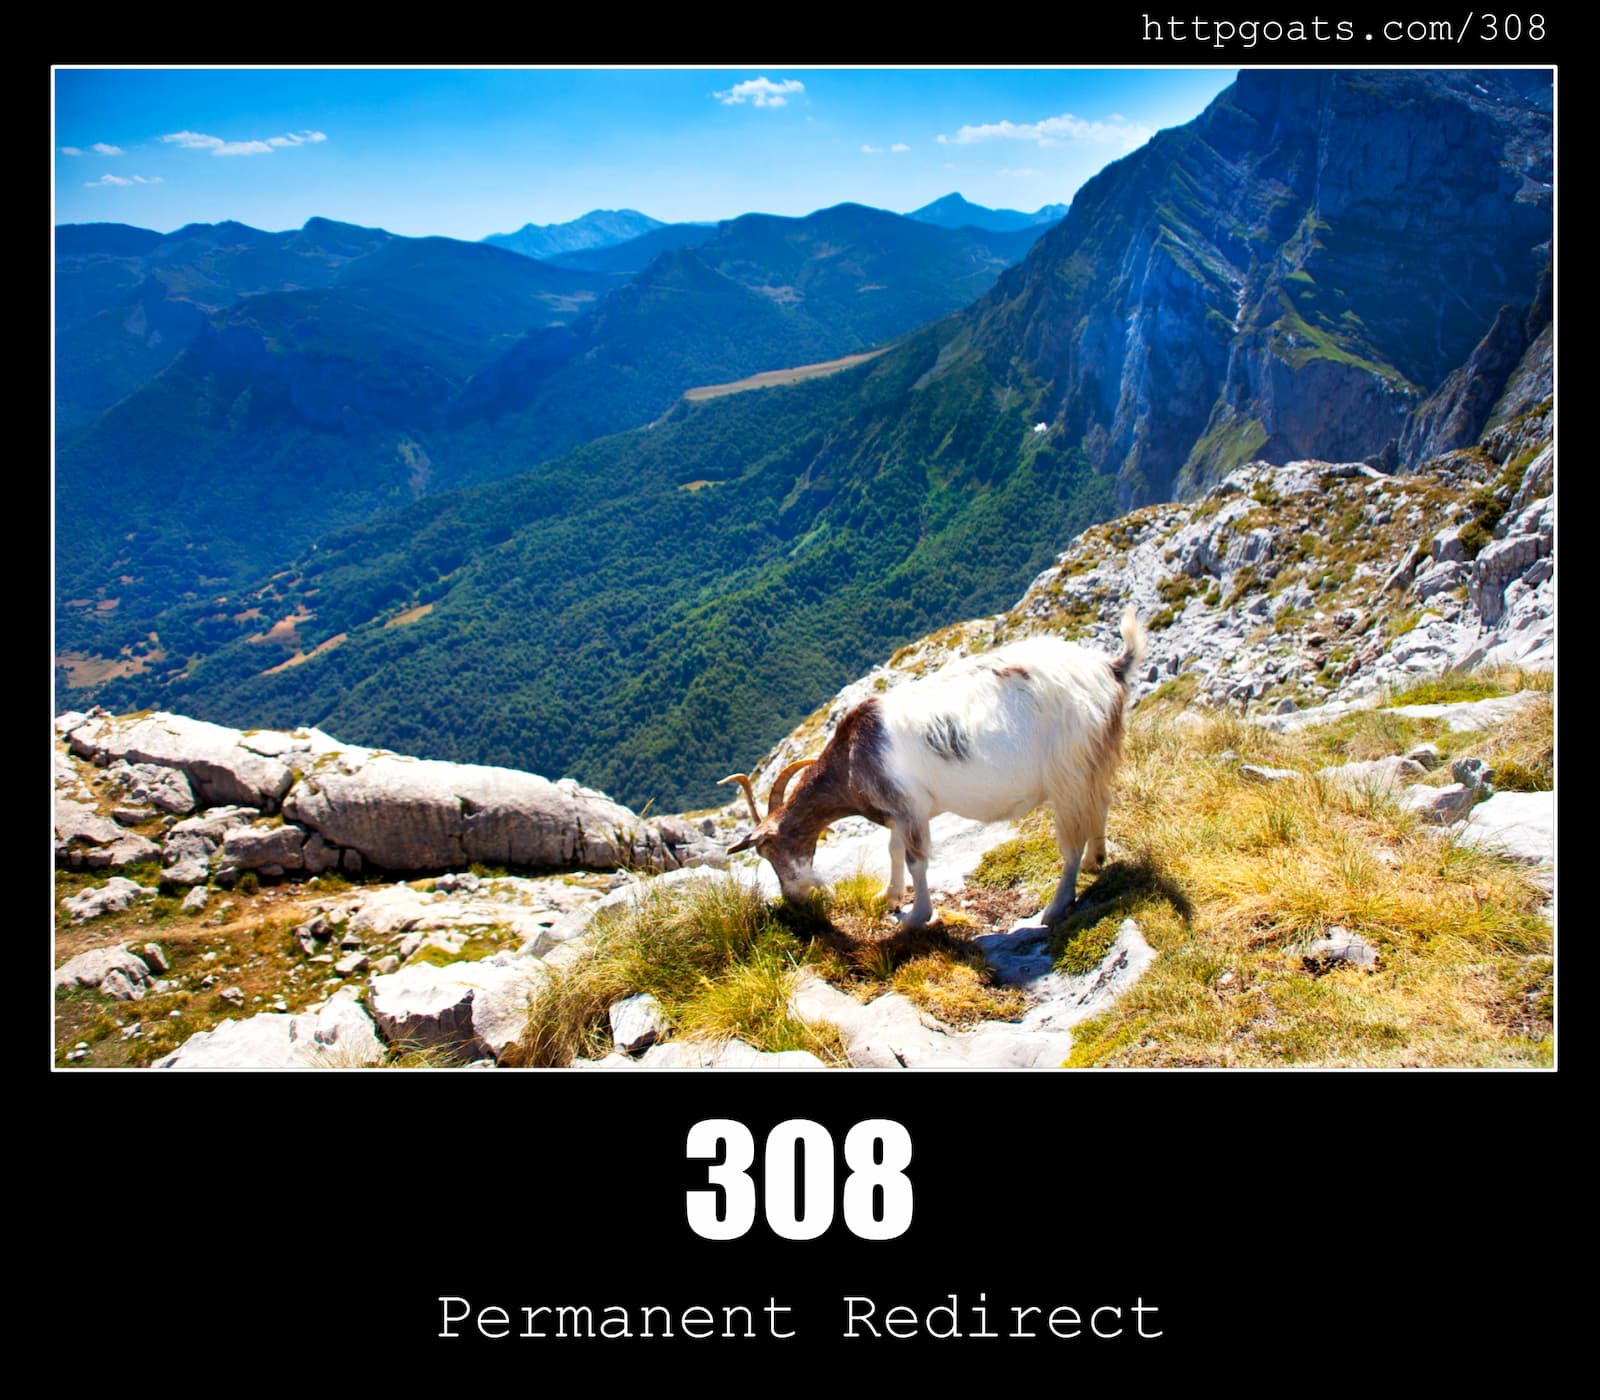 HTTP Status Code 308 Permanent Redirect & Goats